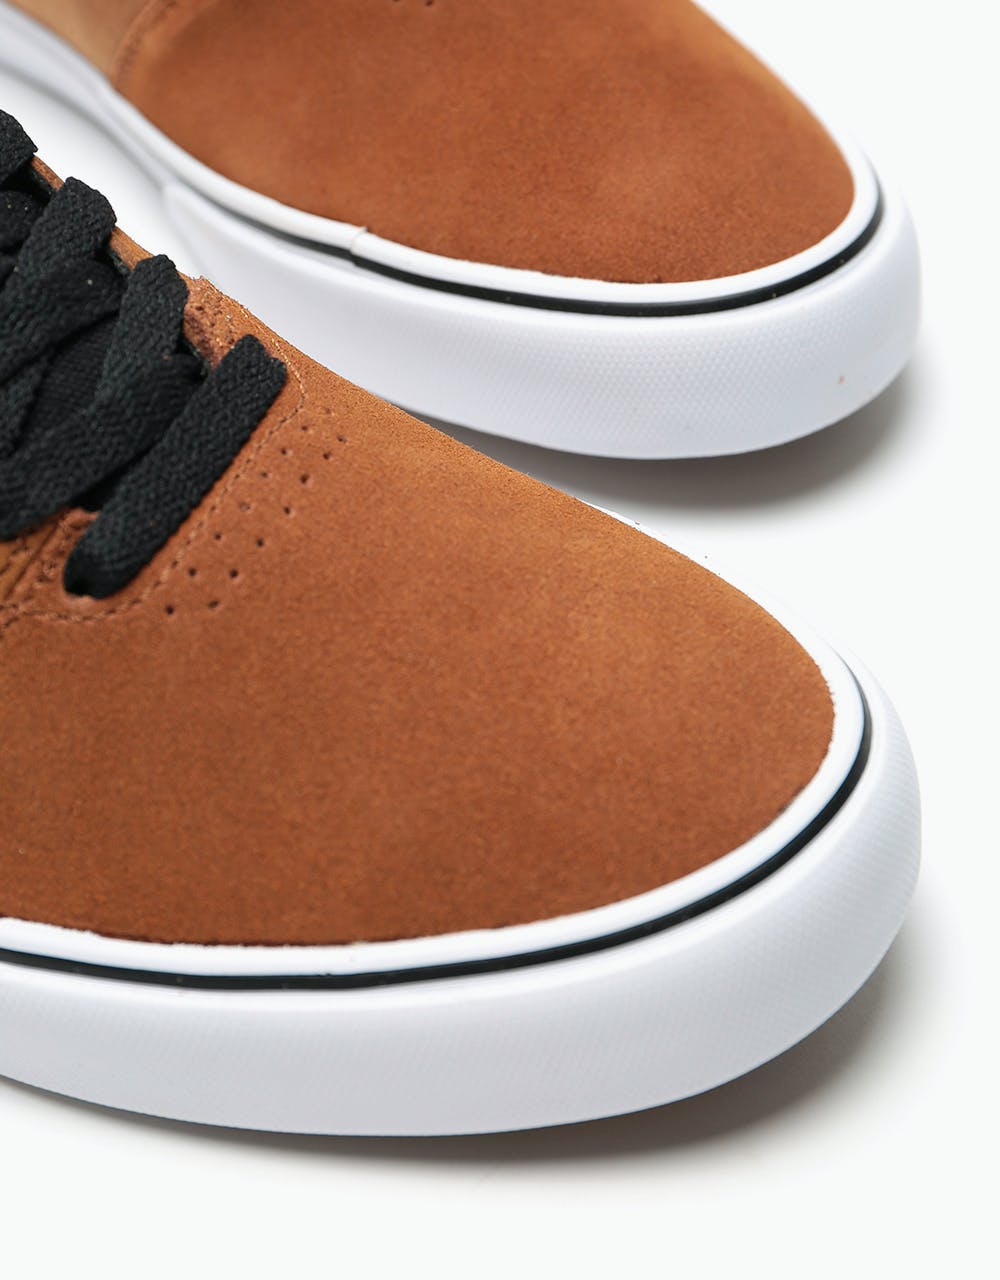 Emerica The Low Vulc Skate Shoes - Tan/Black